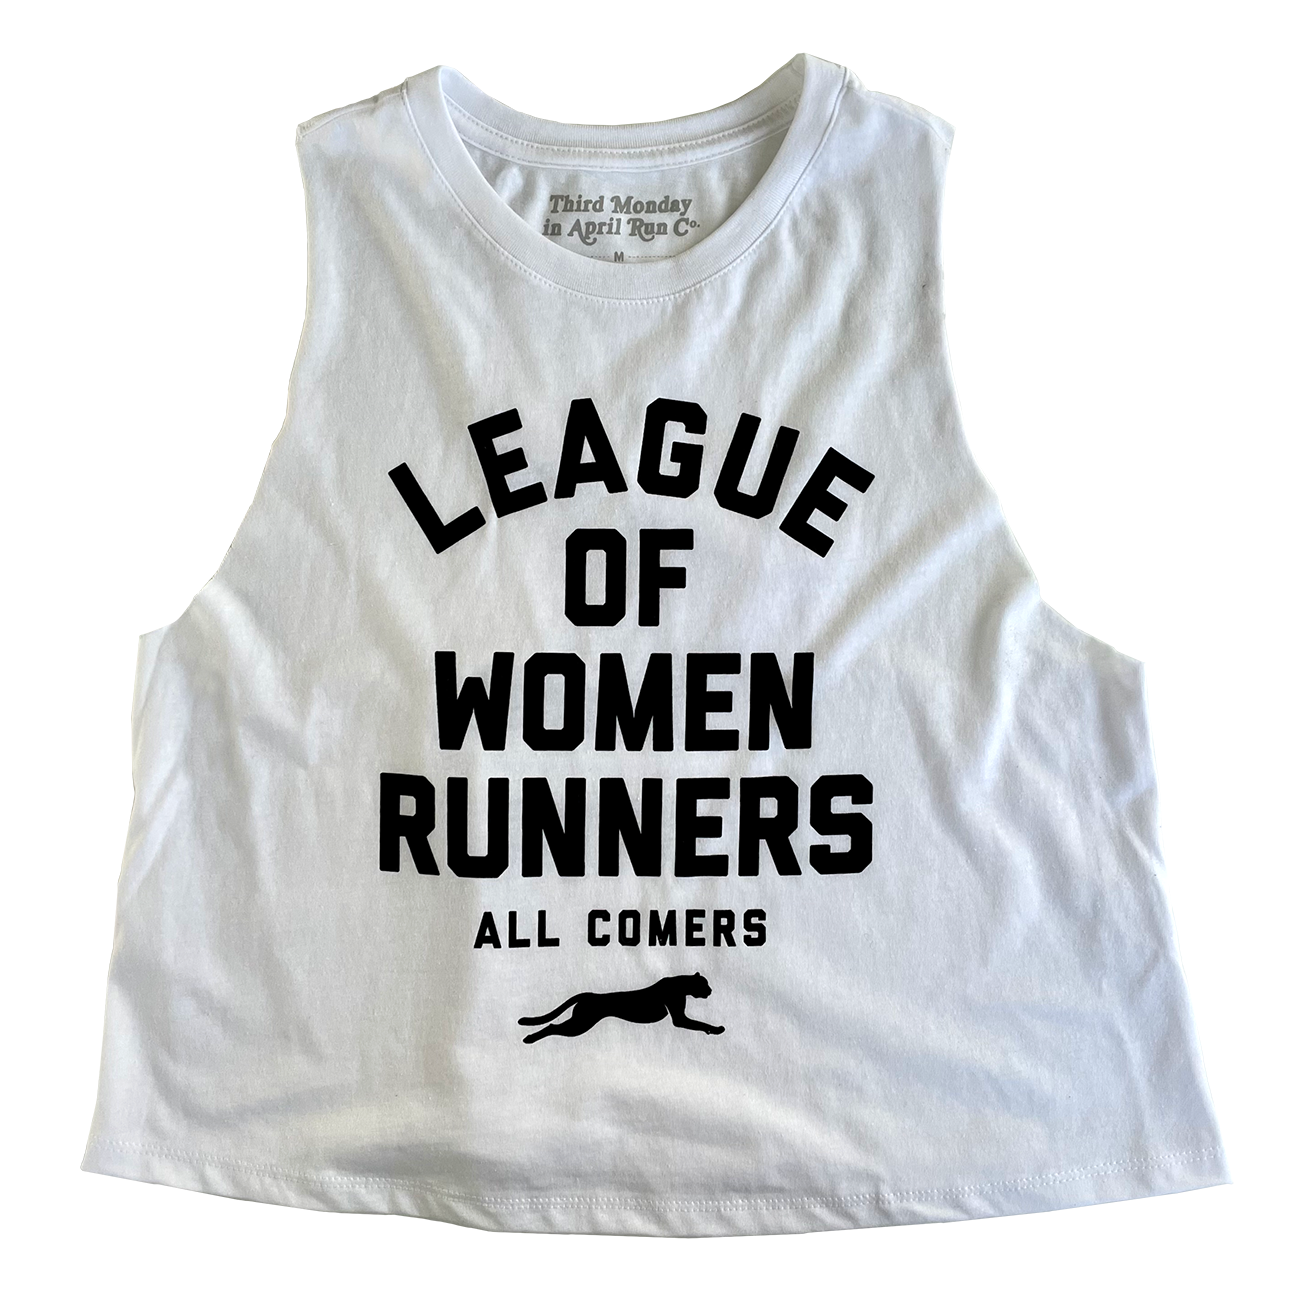 League of Women Runners Tee and Crop Tank